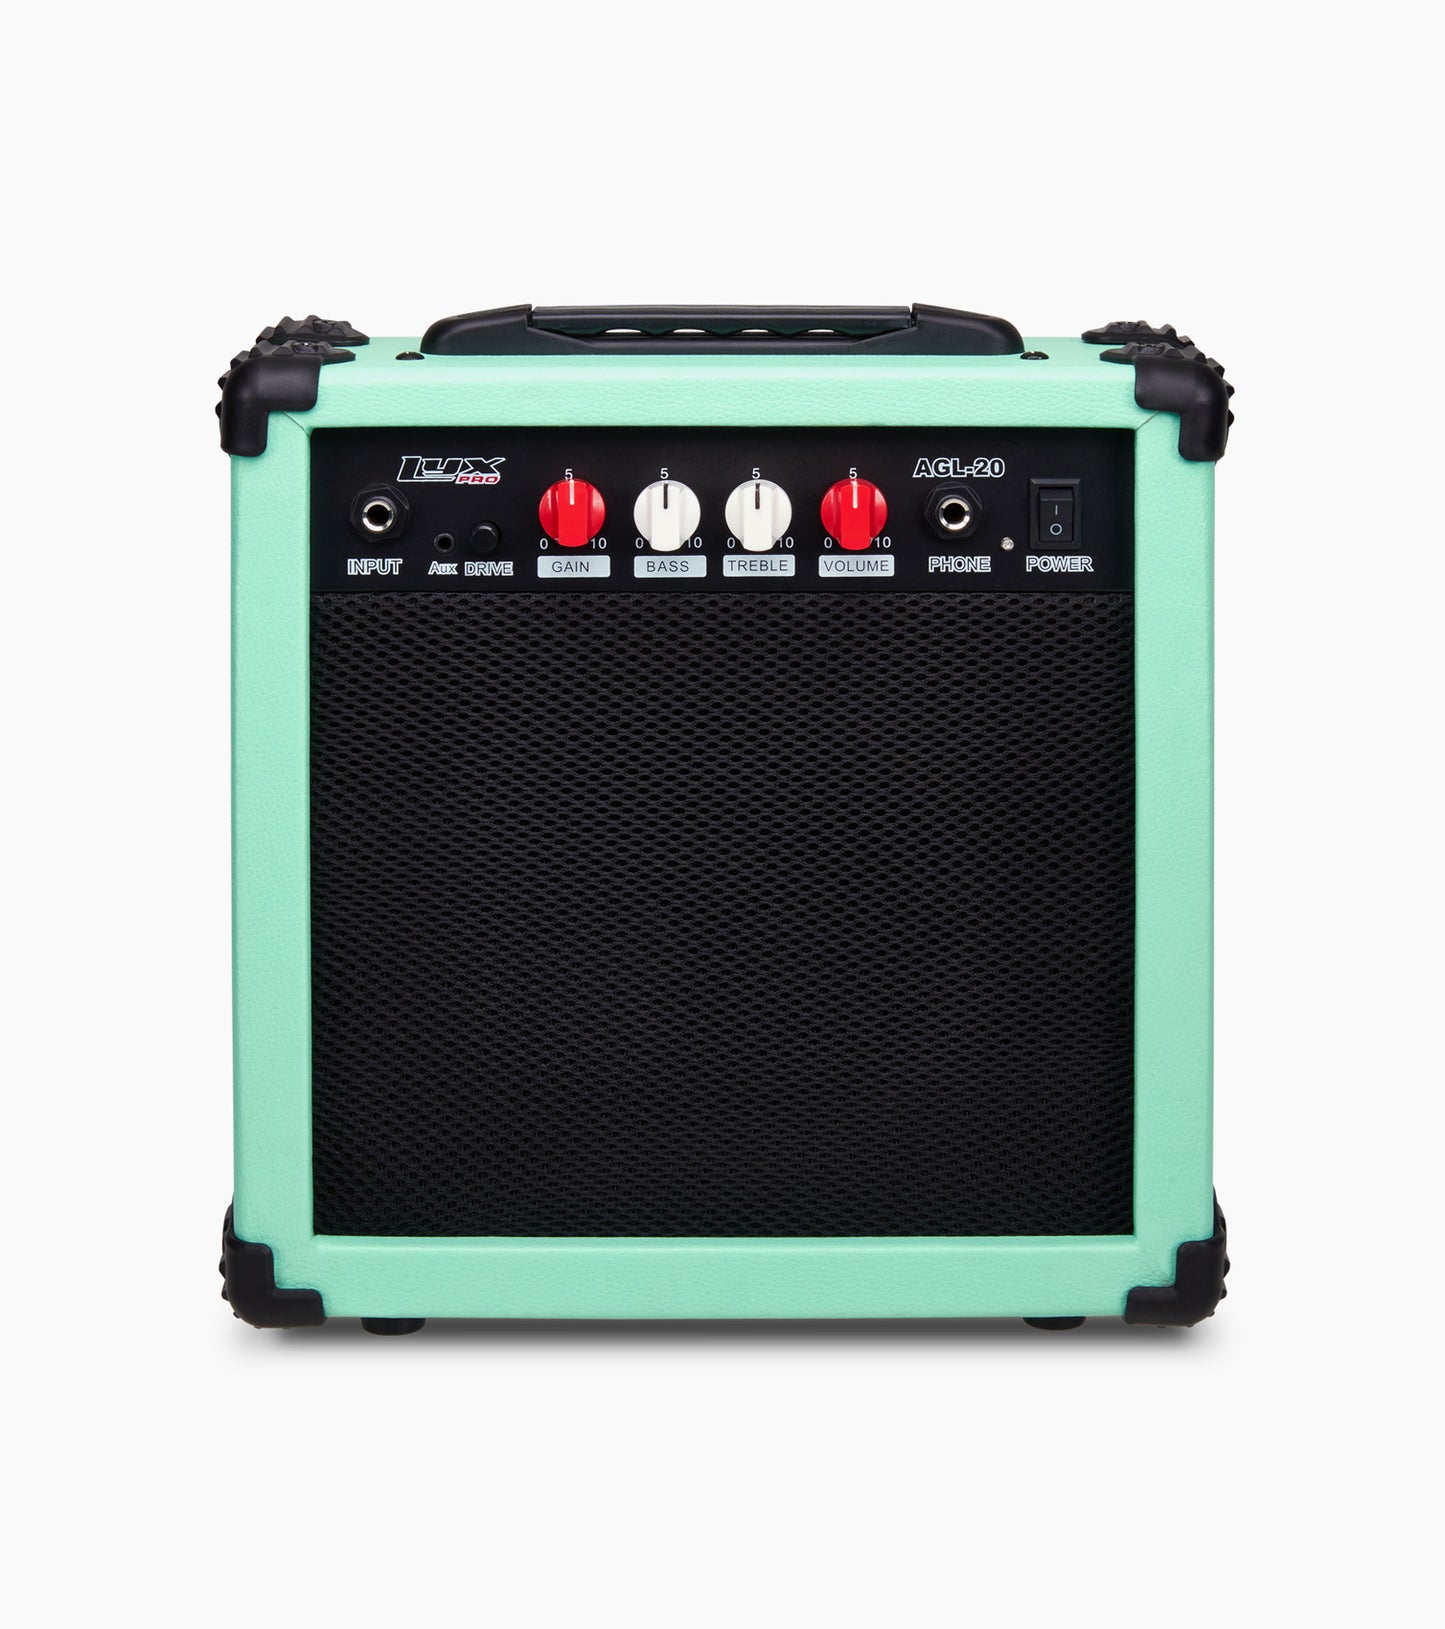 frontal view of green 20 watt electric guitar amplifier